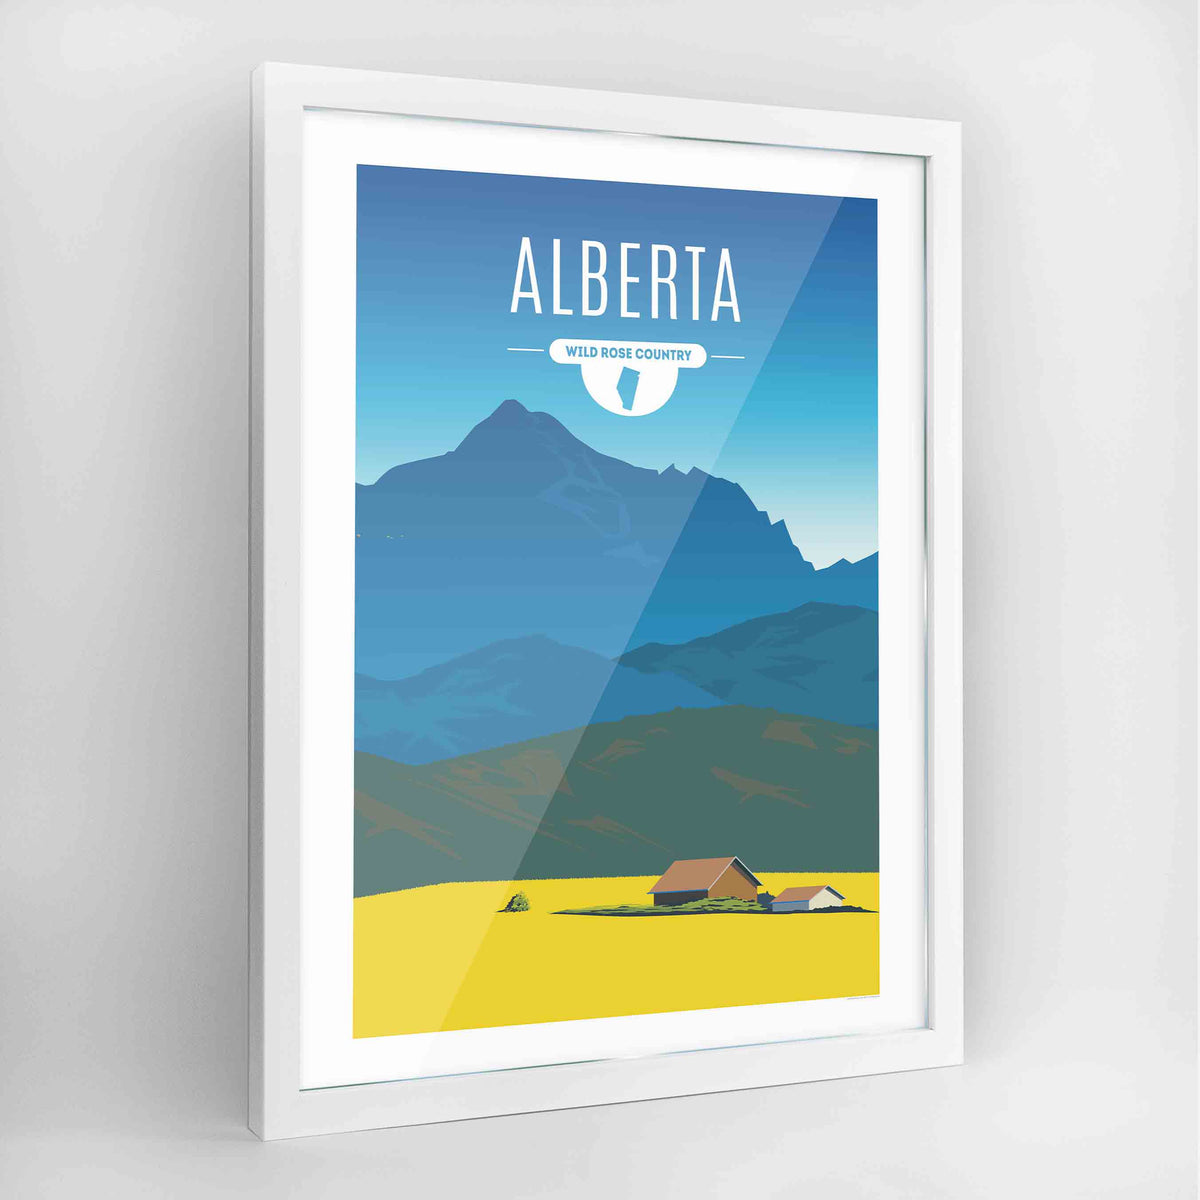 Alberta Province CAD Frame Print